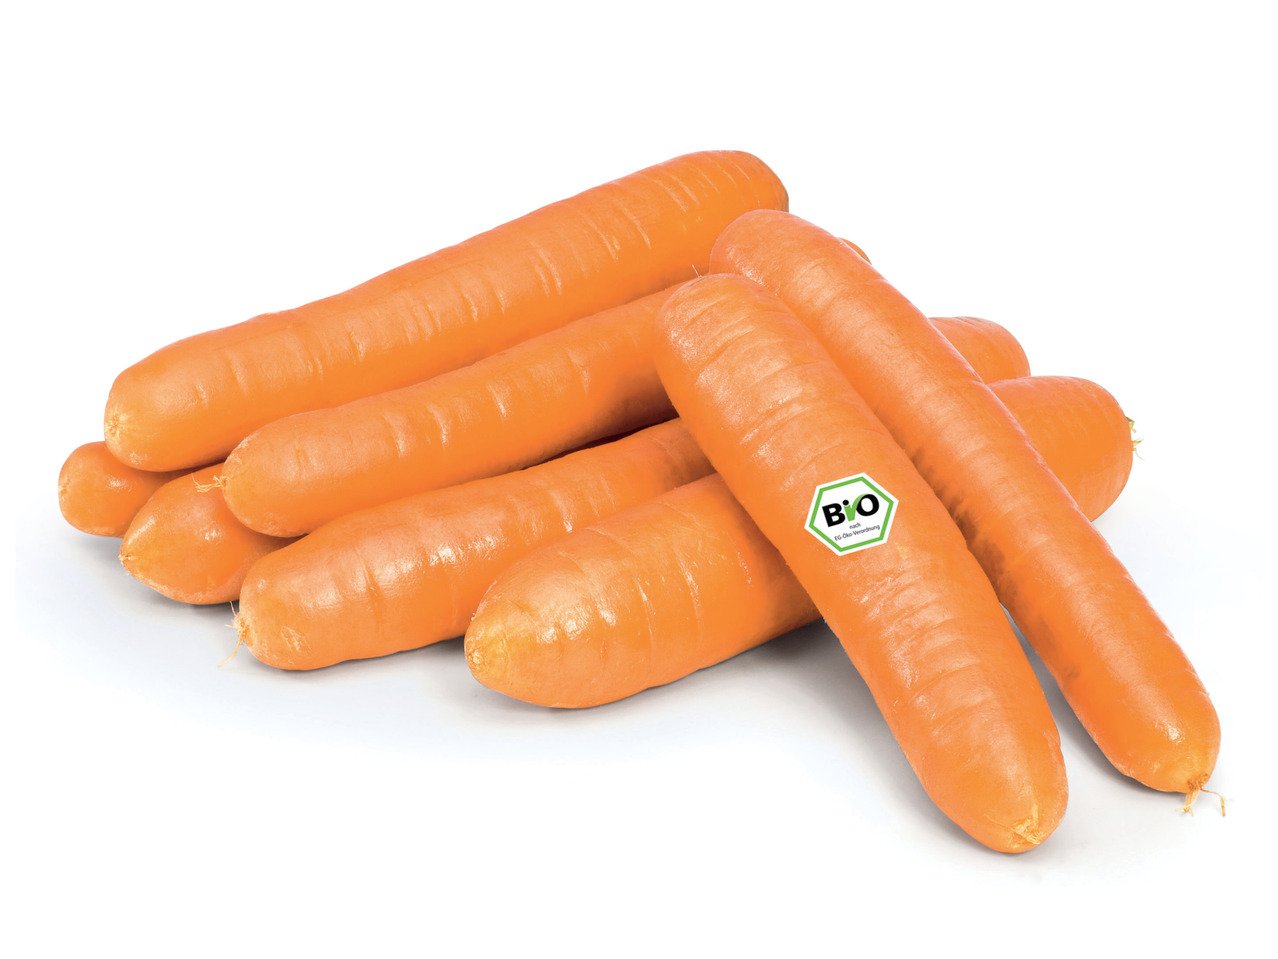 Български био моркови